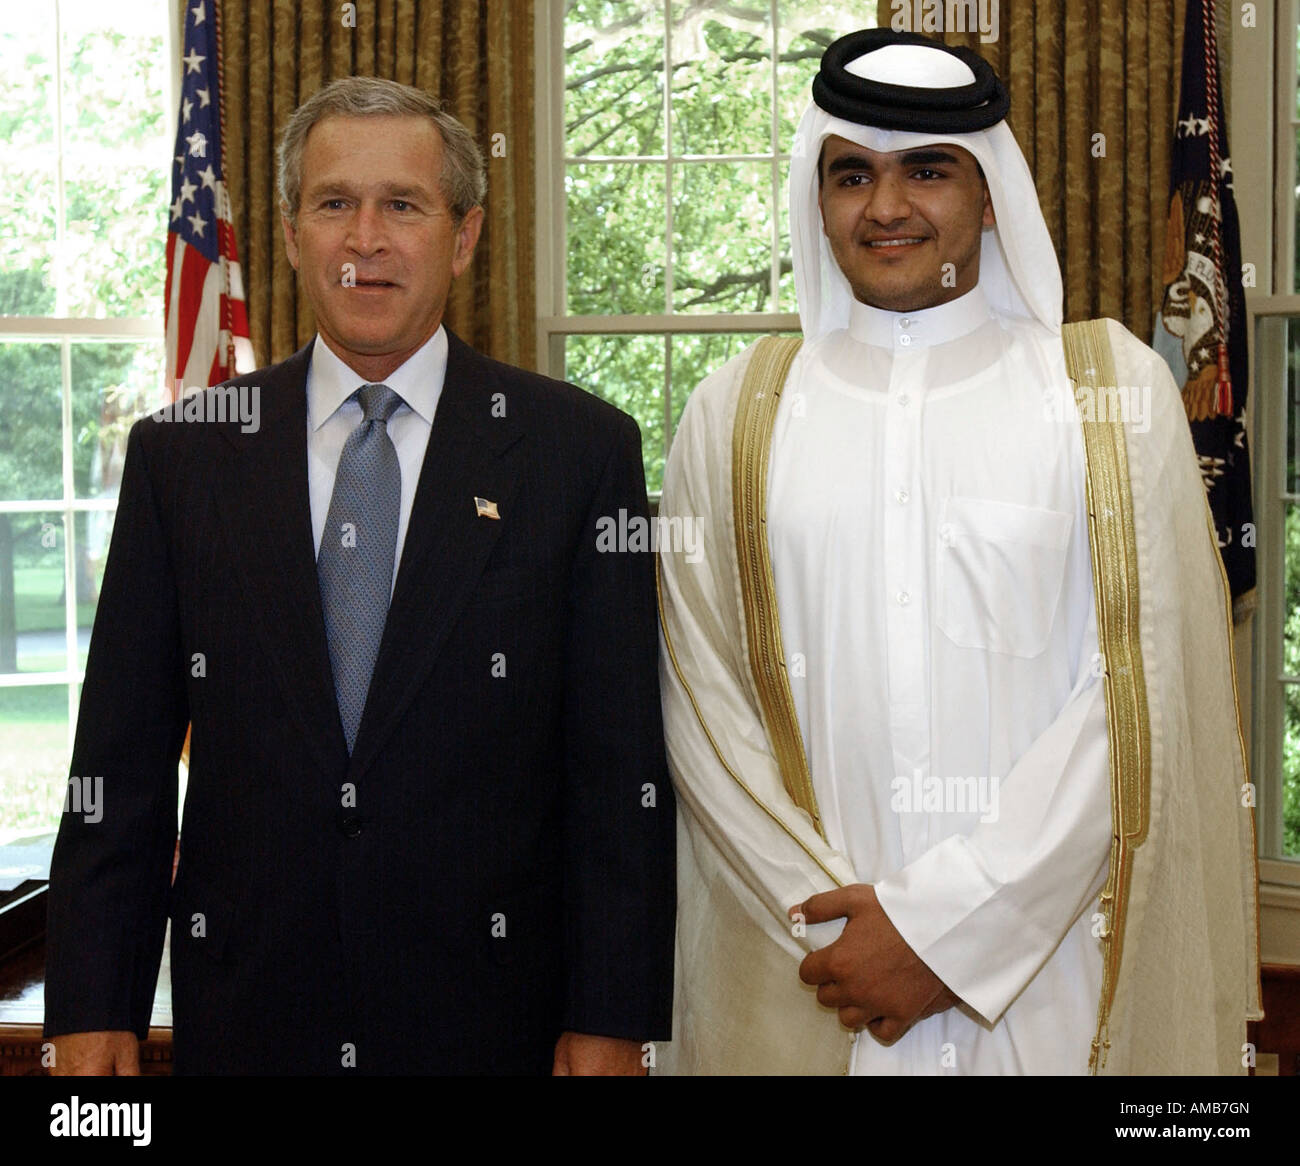 Sheikh Joaan Bin Hamad Al Ihani meets with President Bush at the White House in Washington on Wednesday May 7 2003. Stock Photo